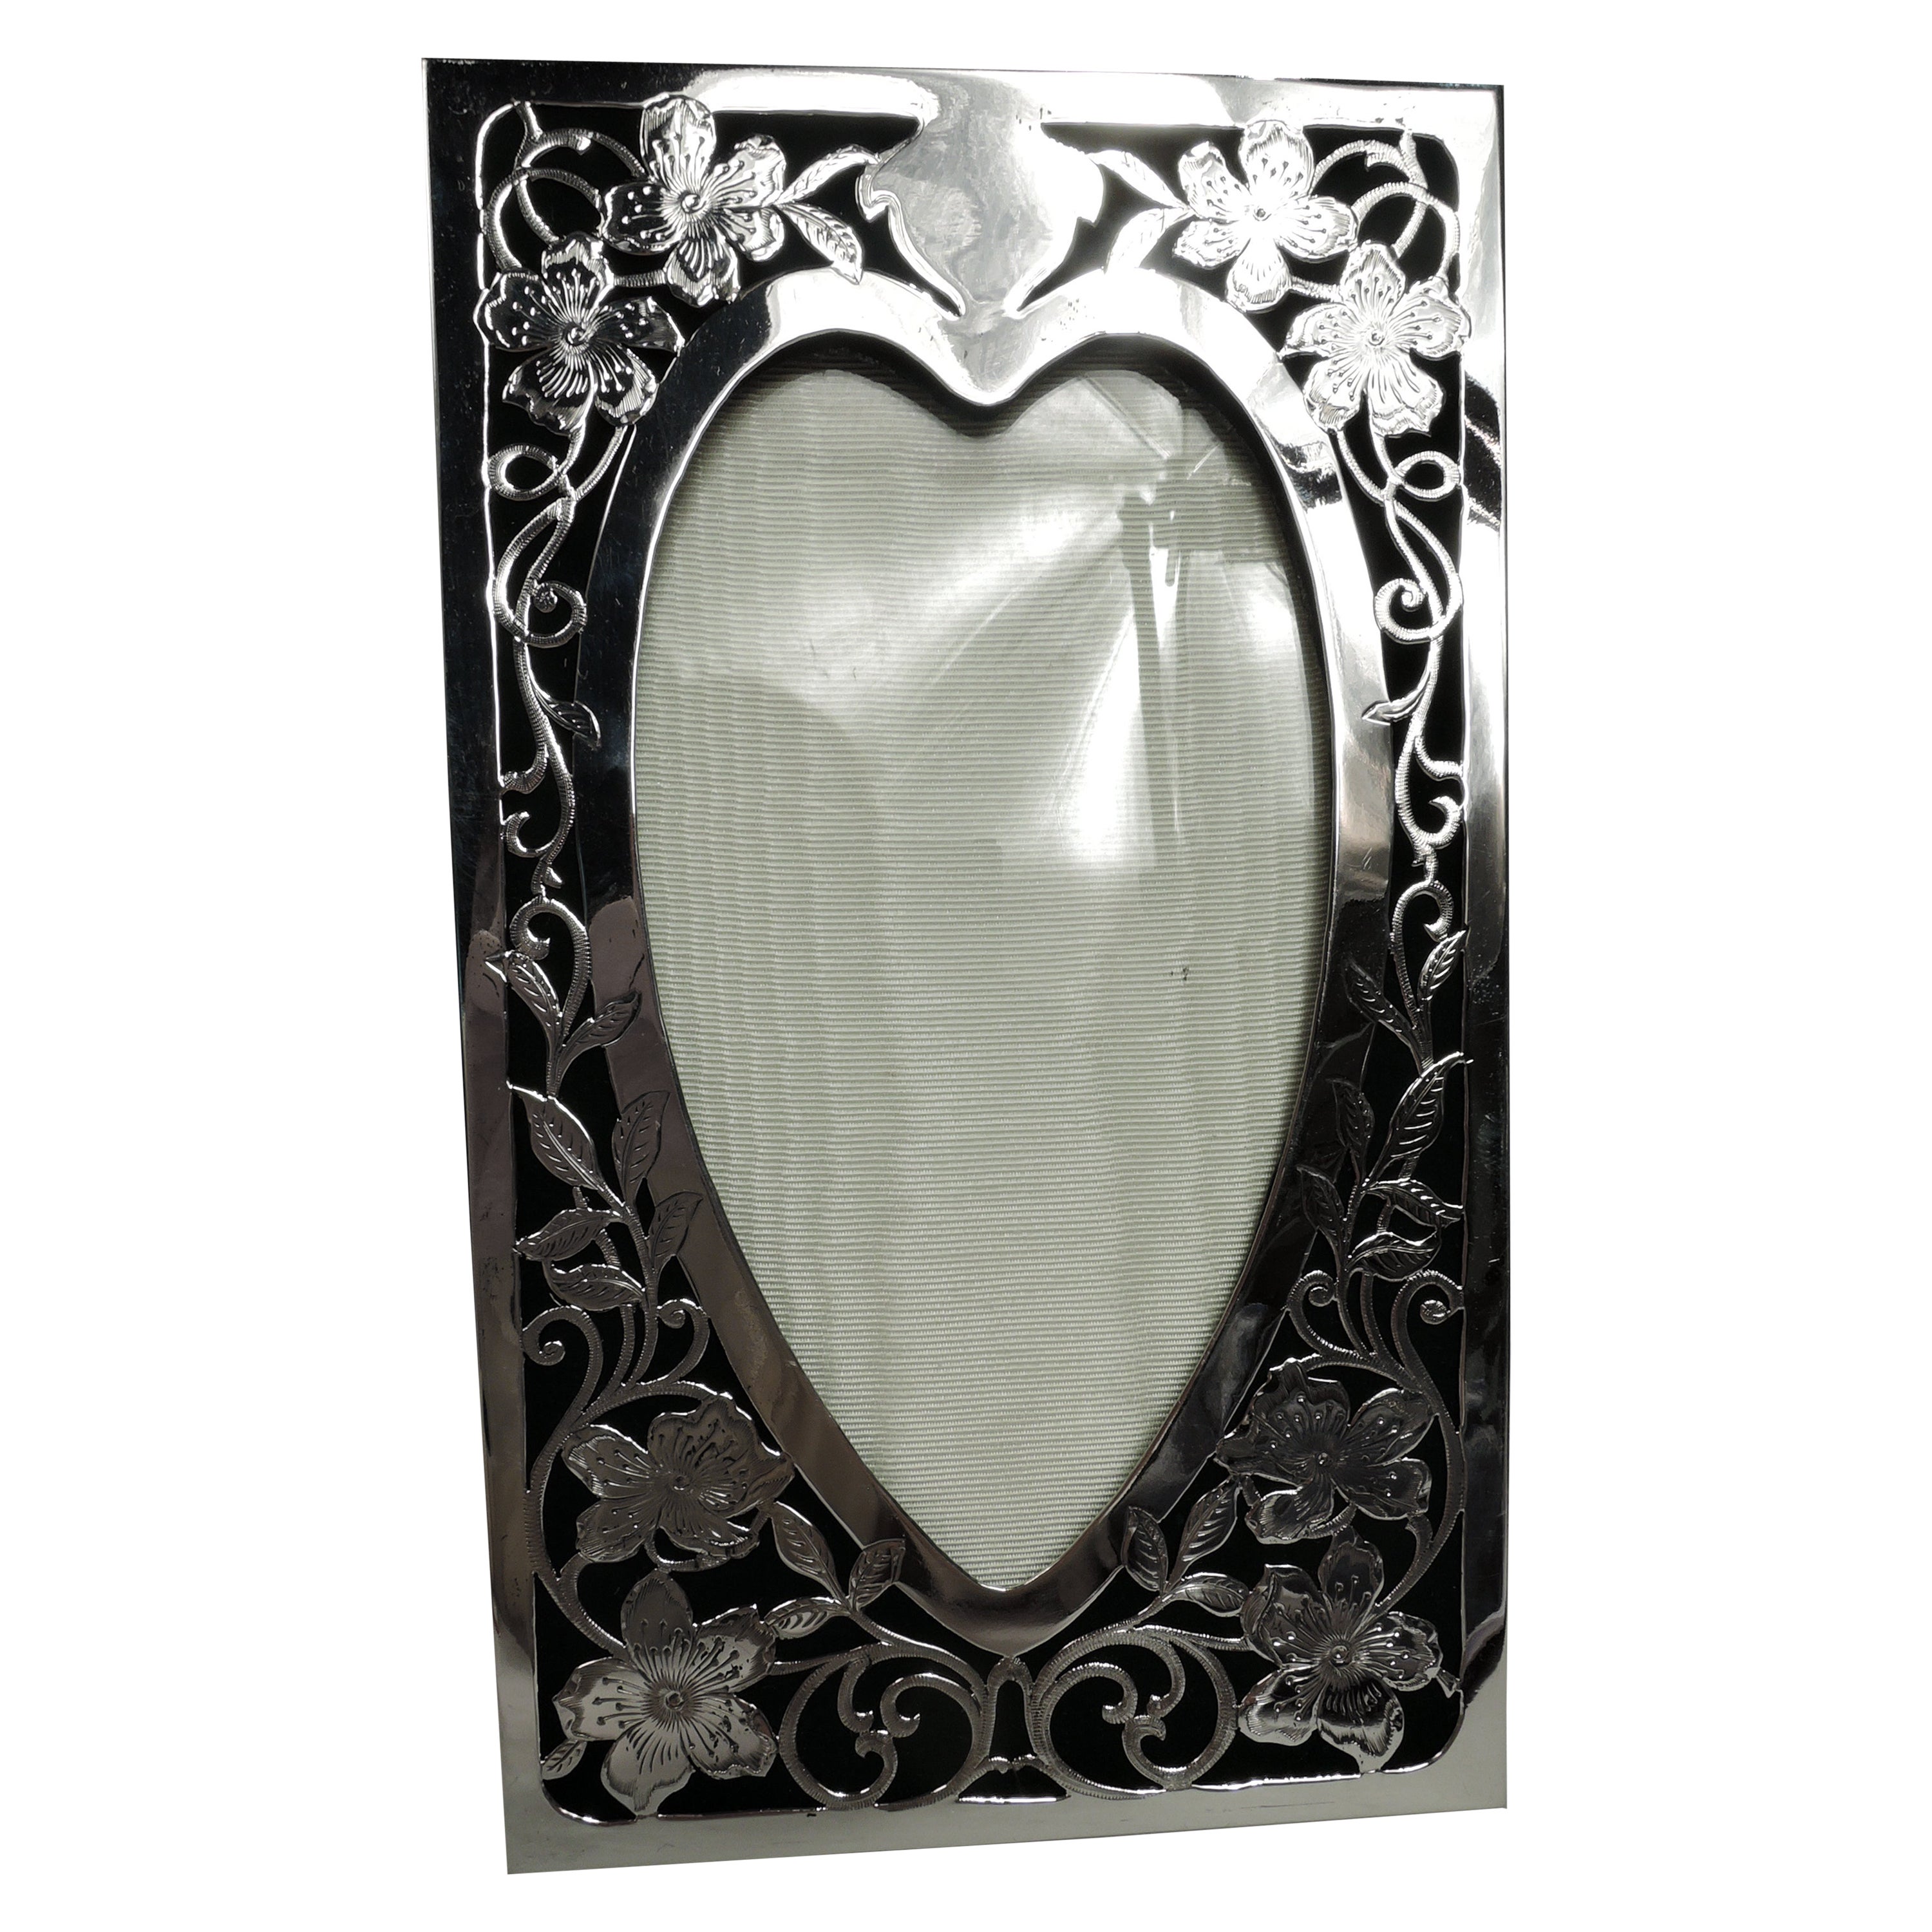 Antique American Art Nouveau Valentine’s Day Heart Picture Frame